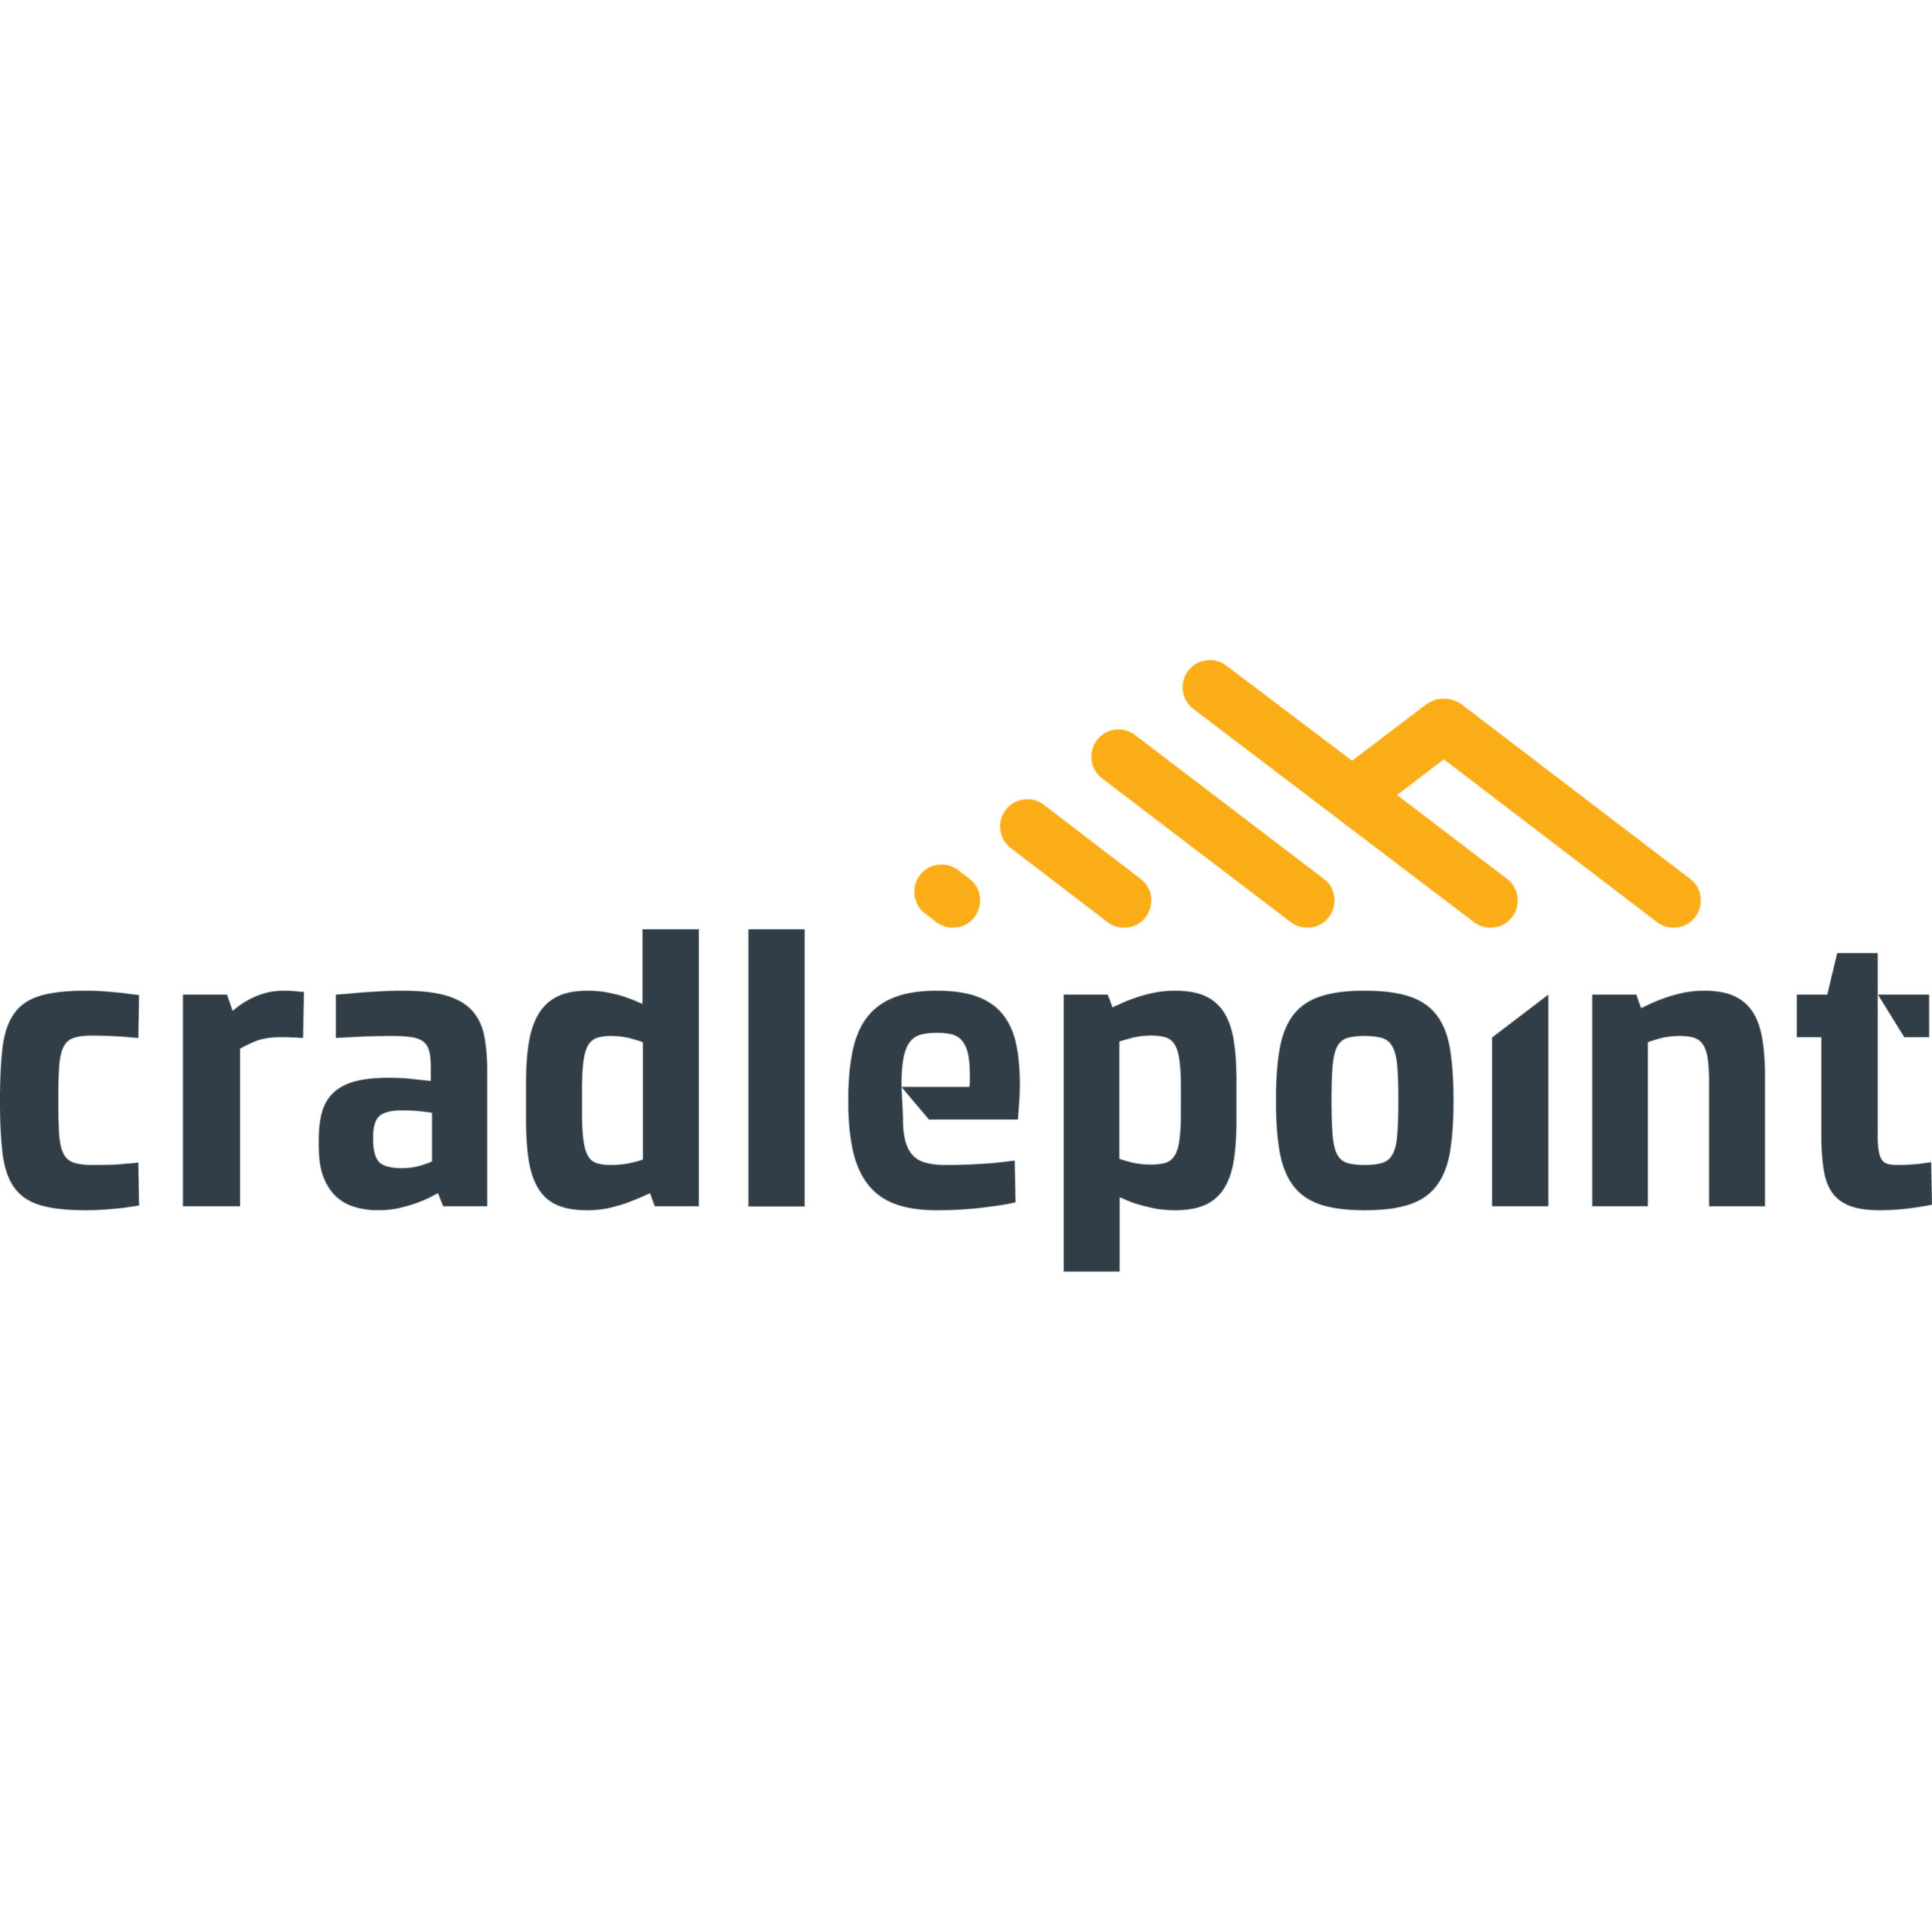 CradlePoint NetCloud Advanced for Branch Performance (Enterprise)Subscription License  BD1-NCADV-R